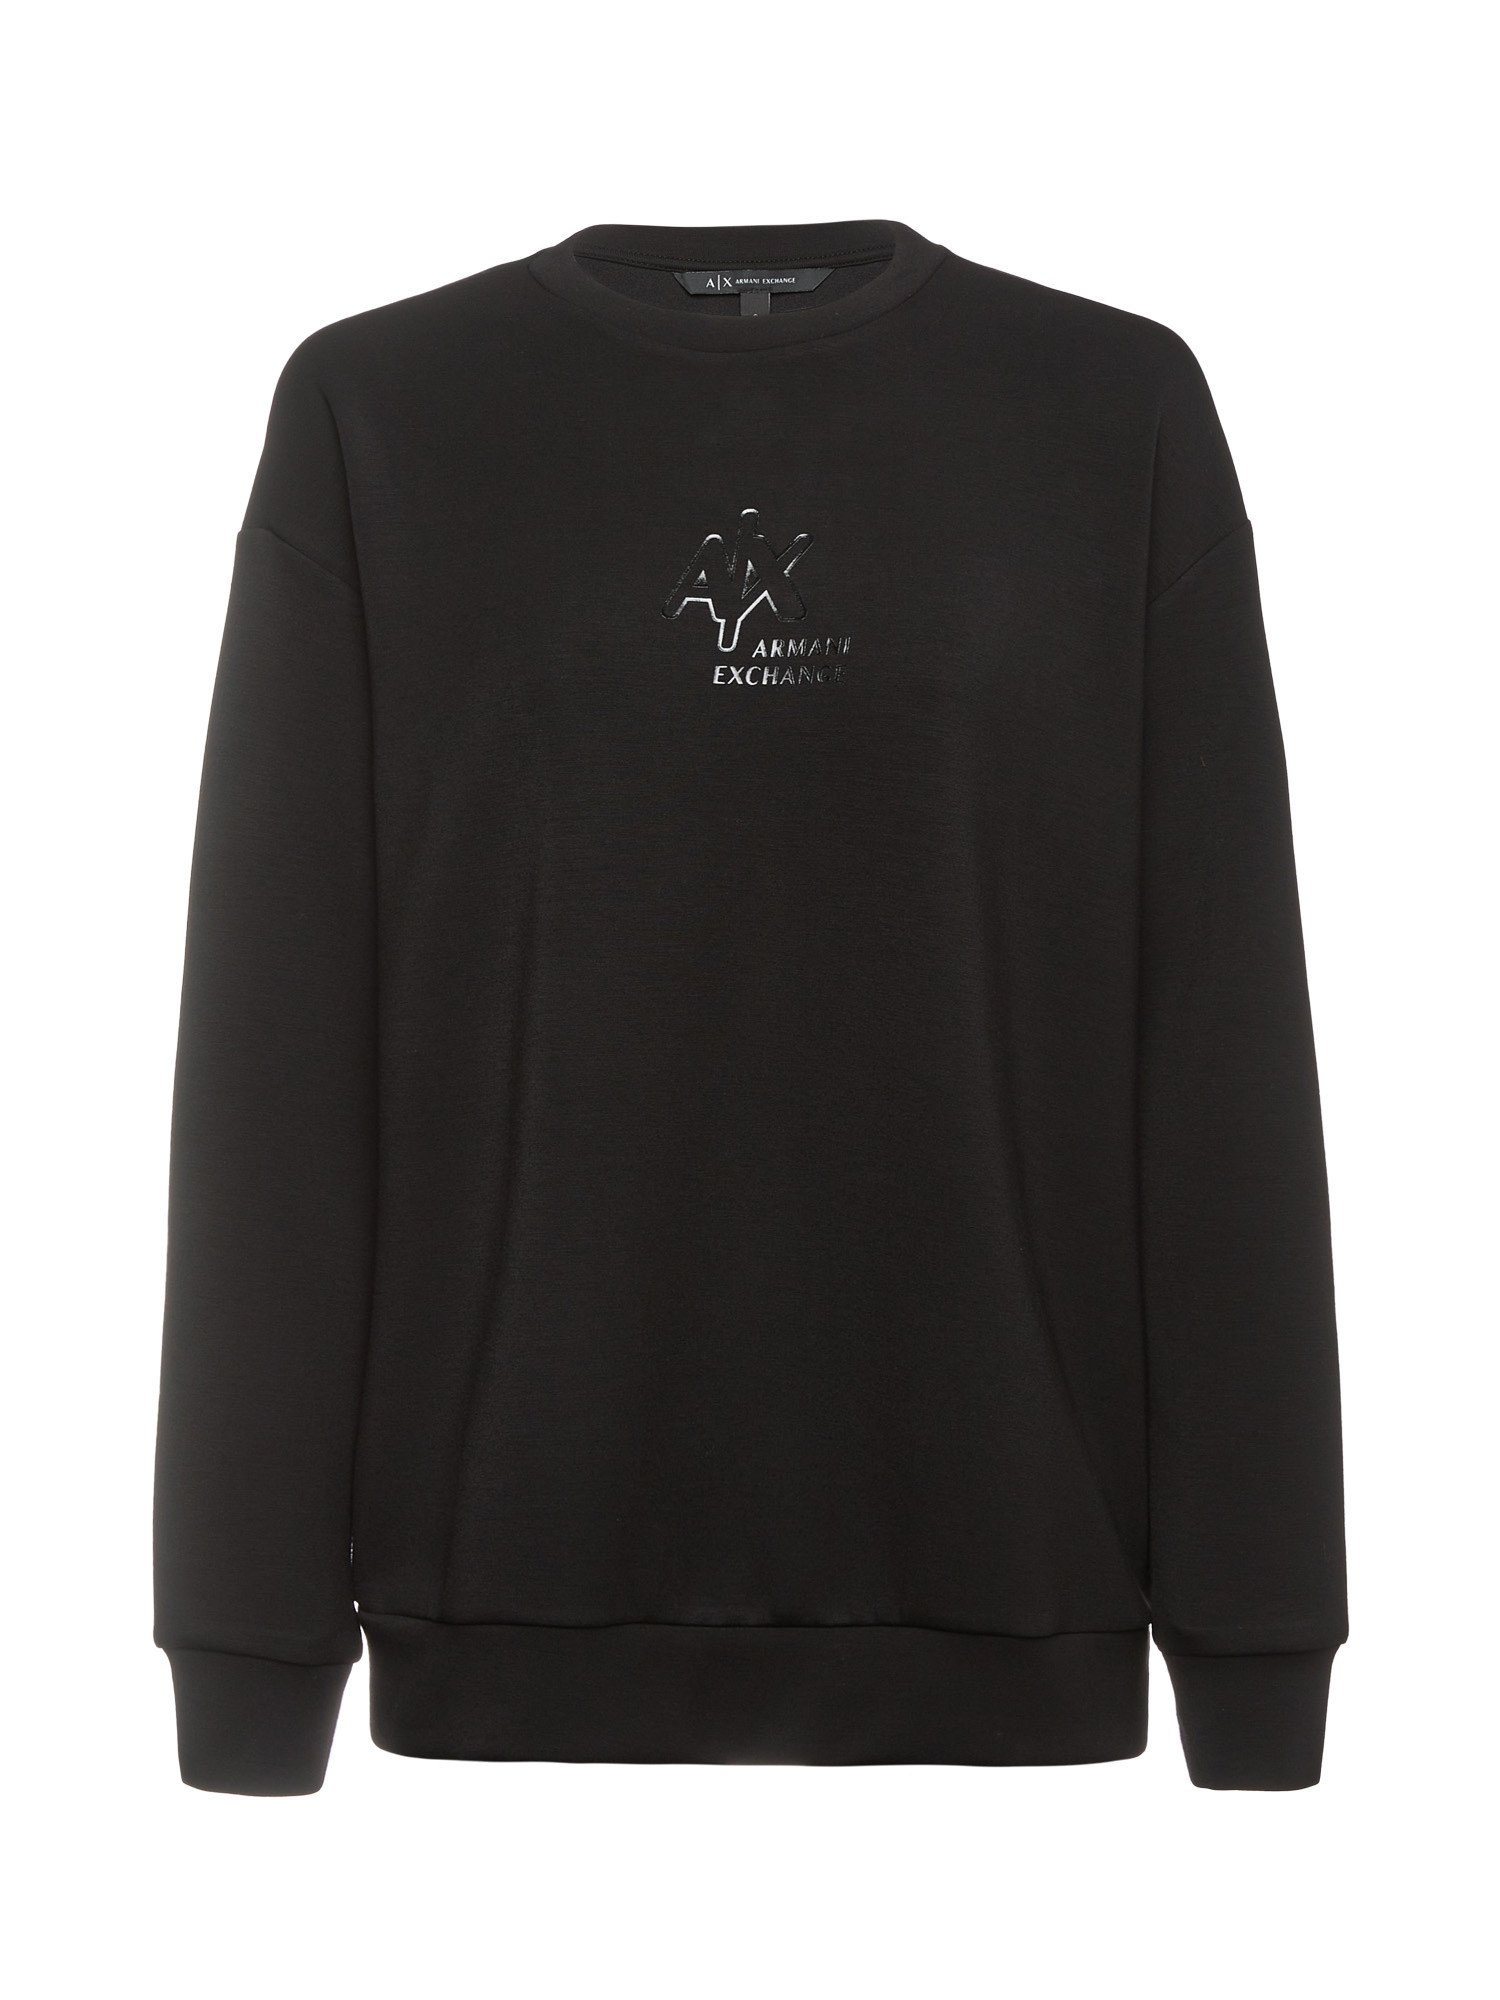 Armani Exchange - Sweatshirt with logo print, Black, large image number 0